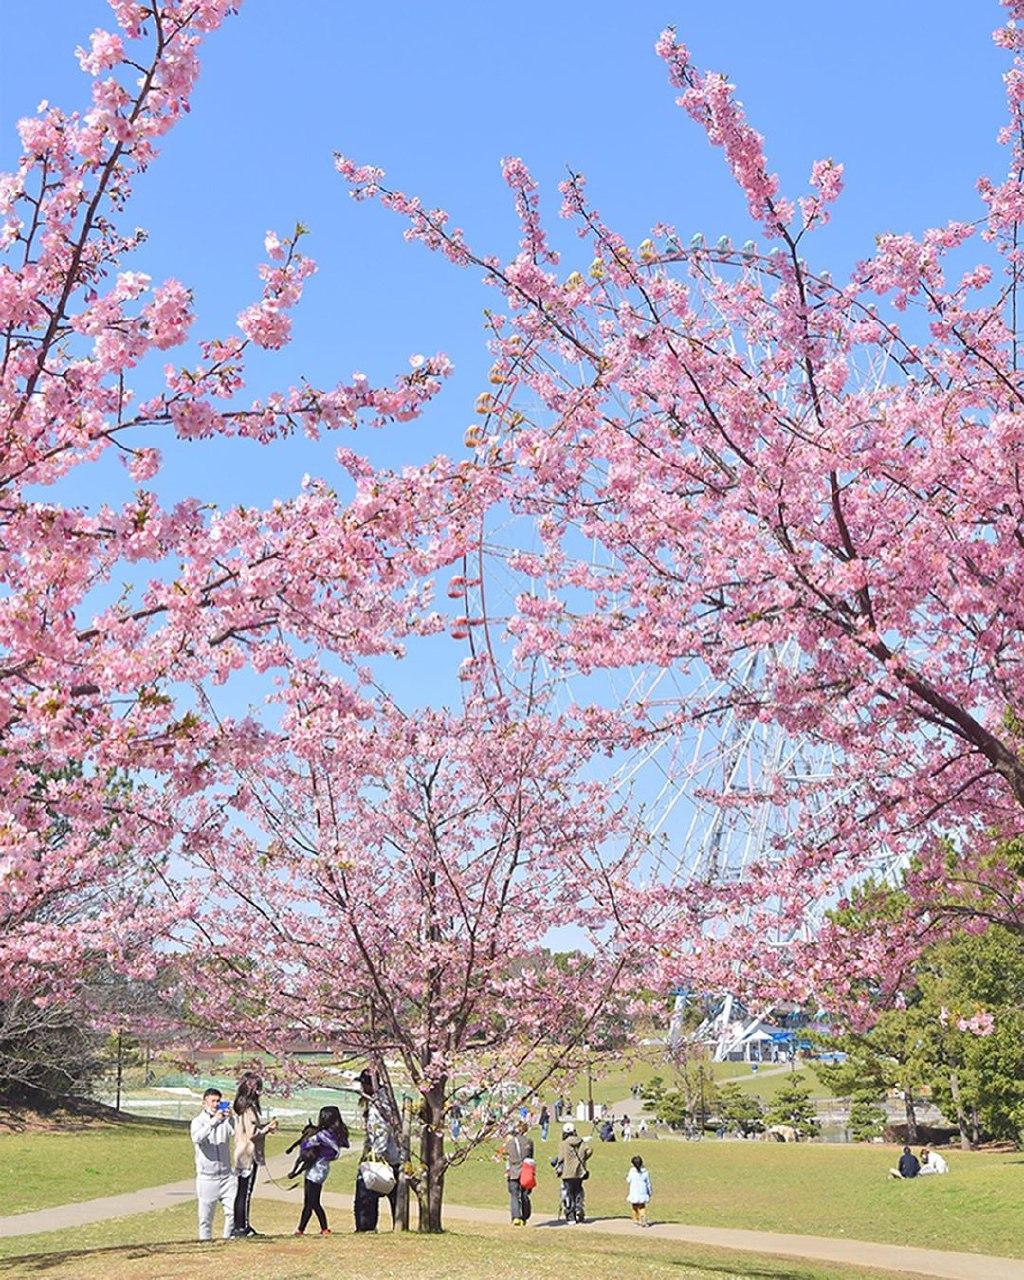 Kasai rinkai park cherry blossom